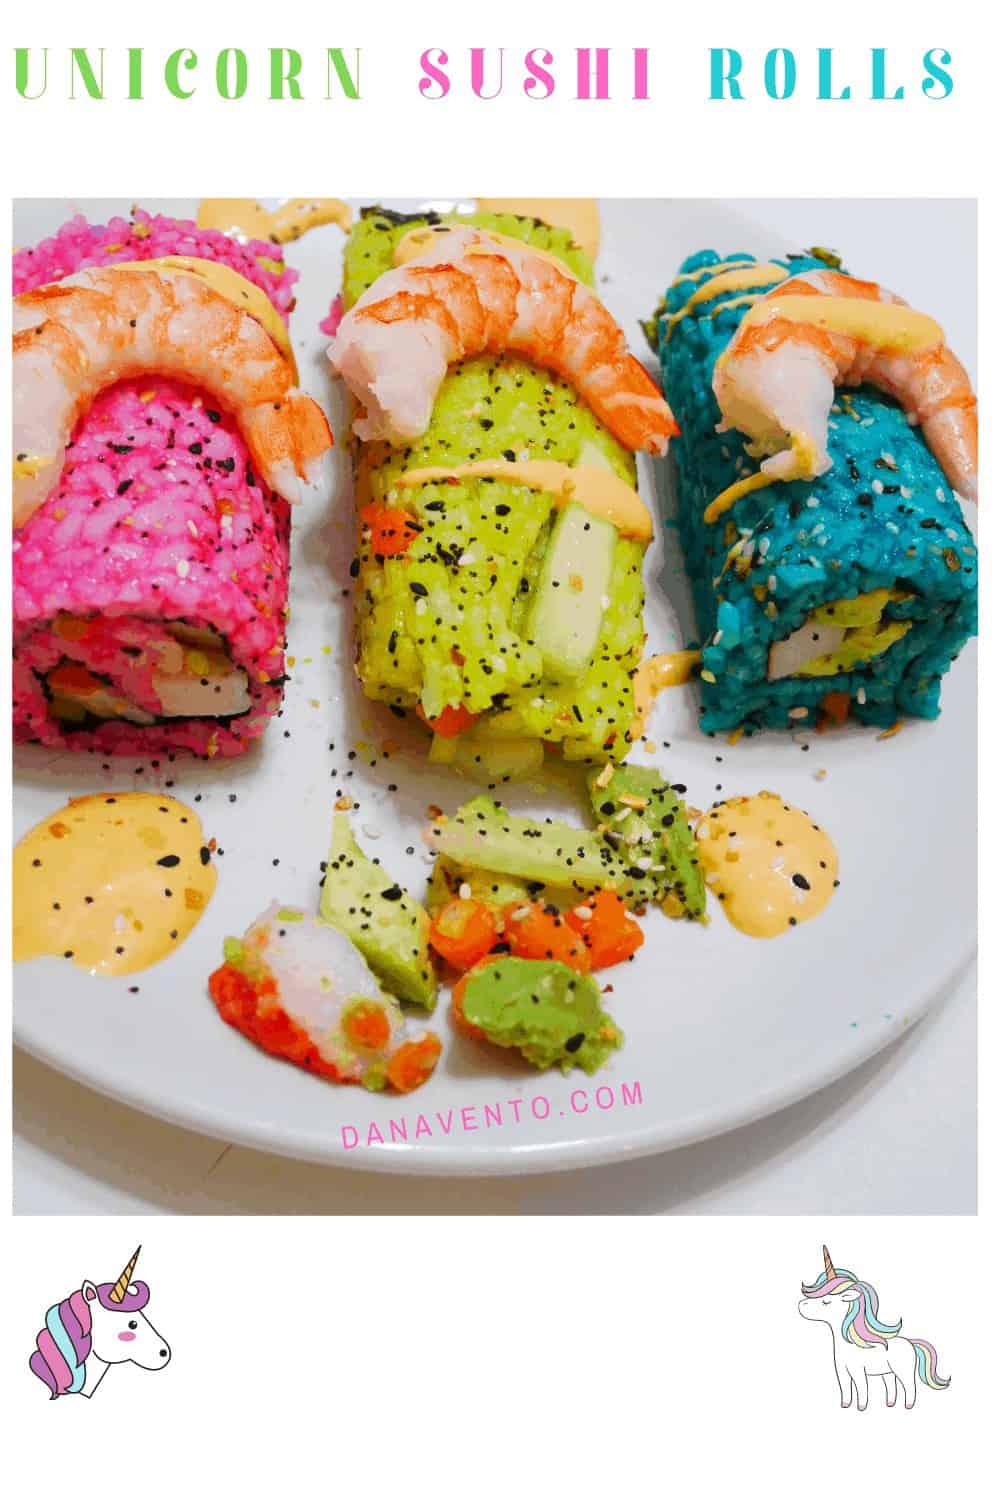 unicorn sushi rolls on a plate 